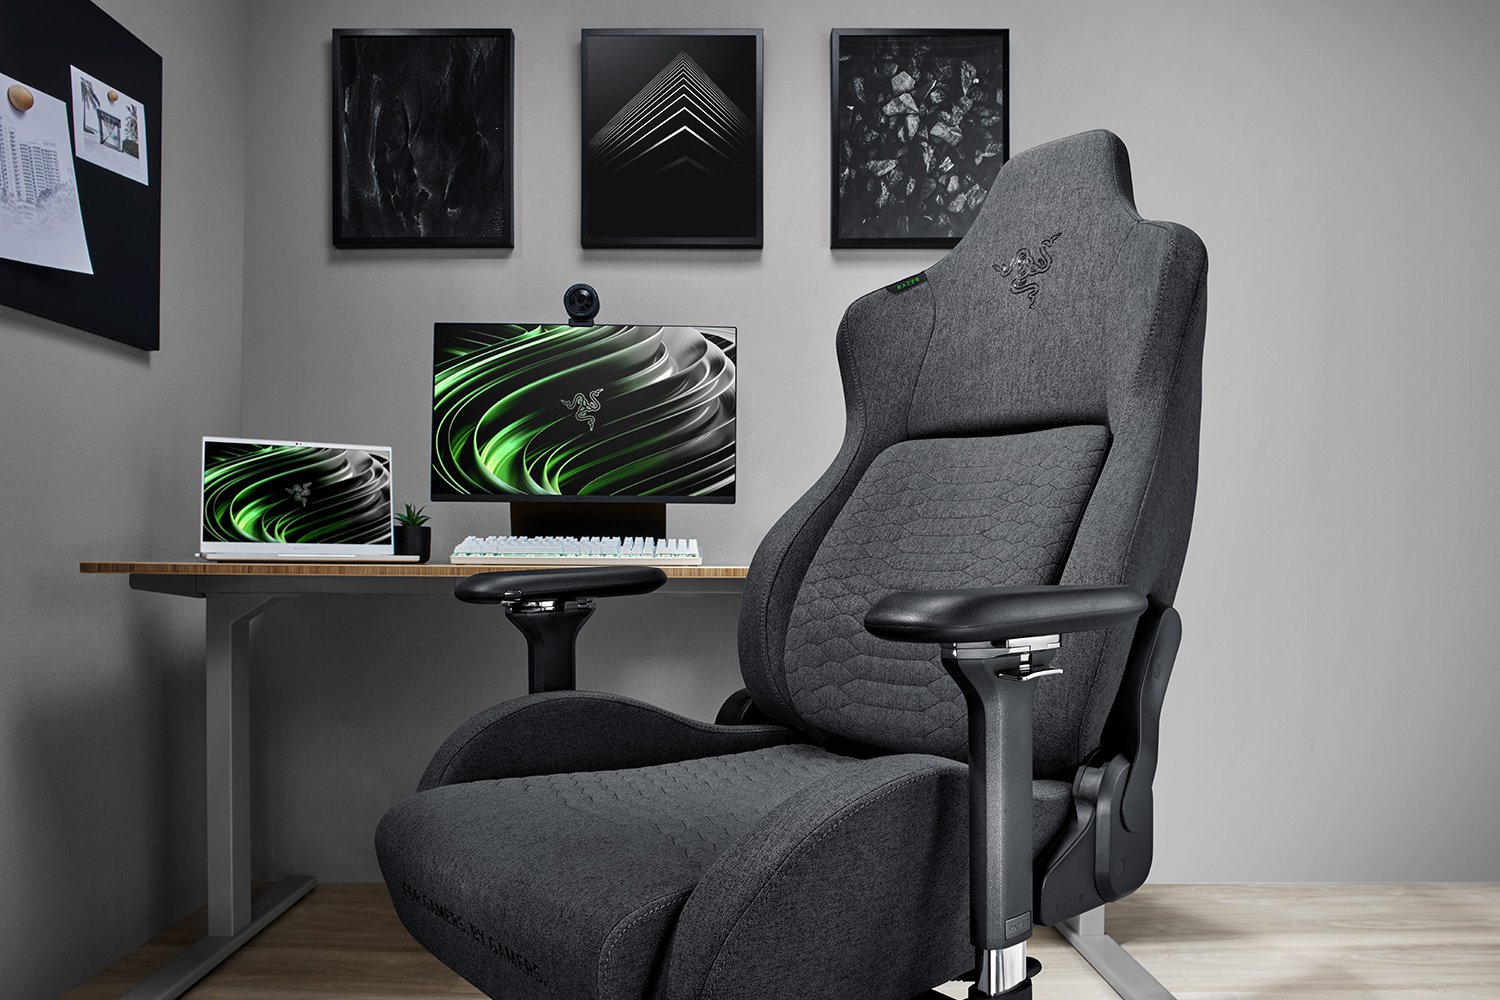 Razer Iskur Fabric Gaming Chair